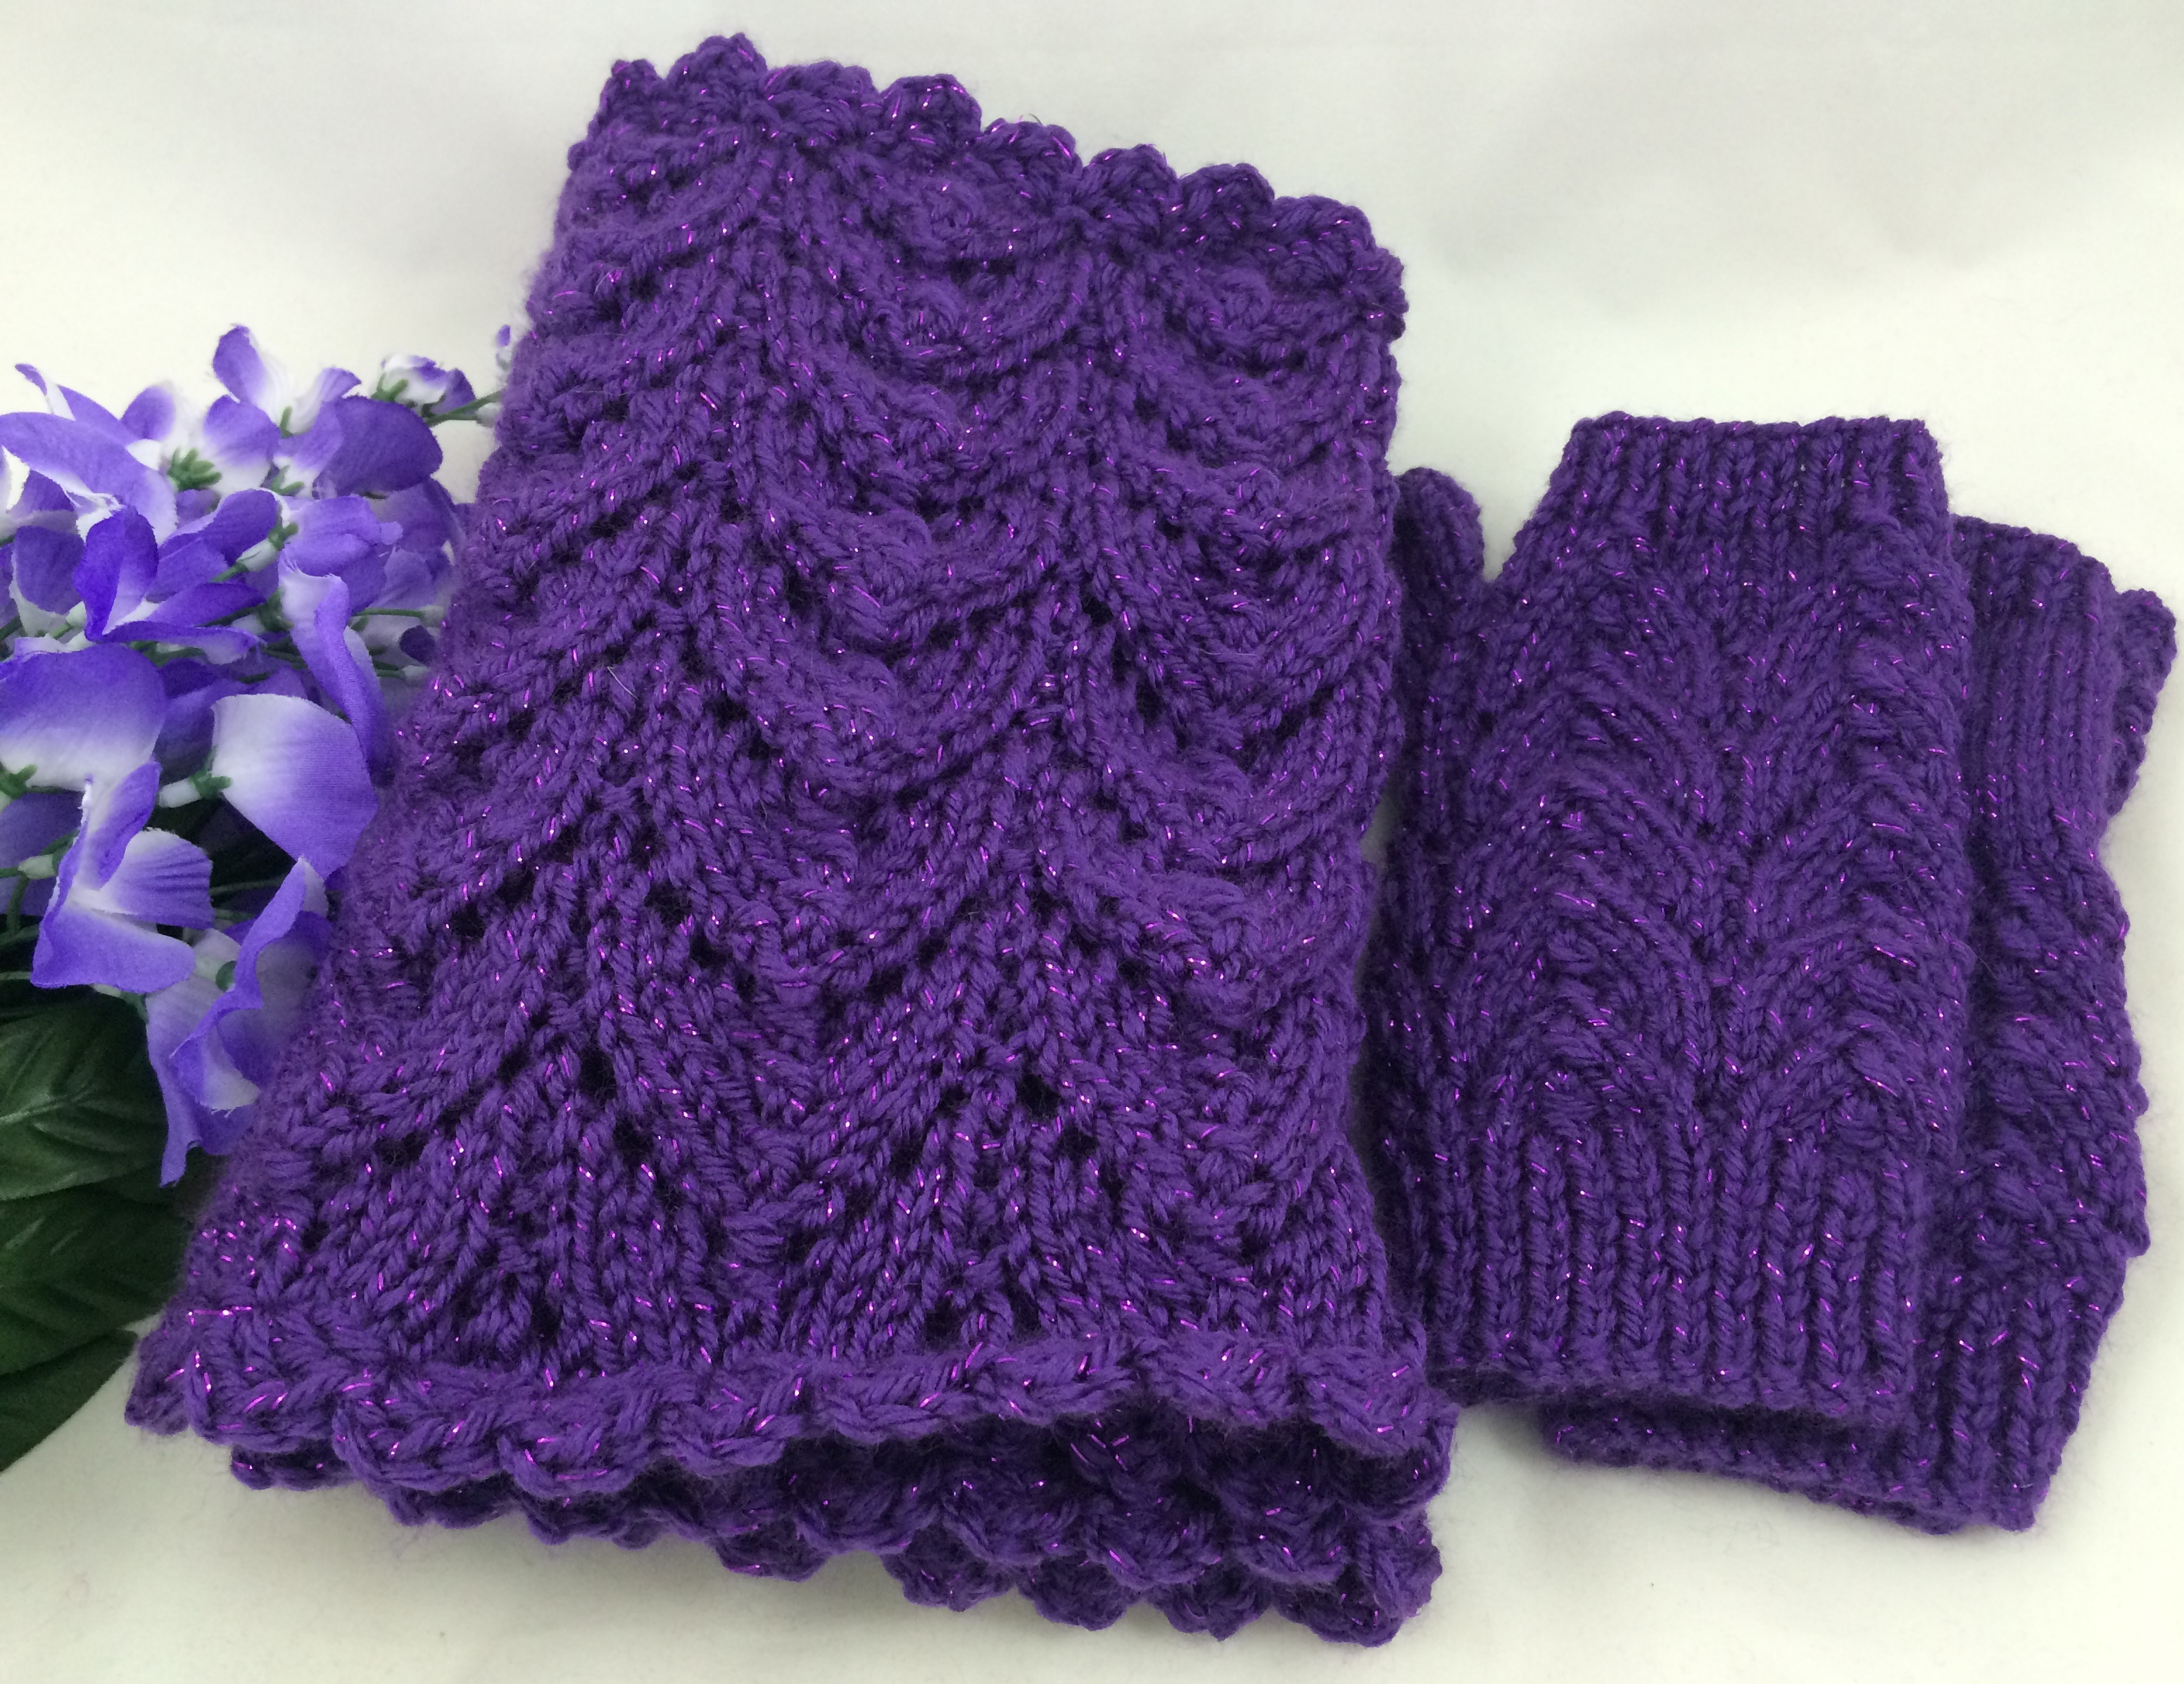 Caron Simply Soft Crochet Patterns Infinity Scarf Fingerless Glove Set Purple Sparkle Caron Simply Soft